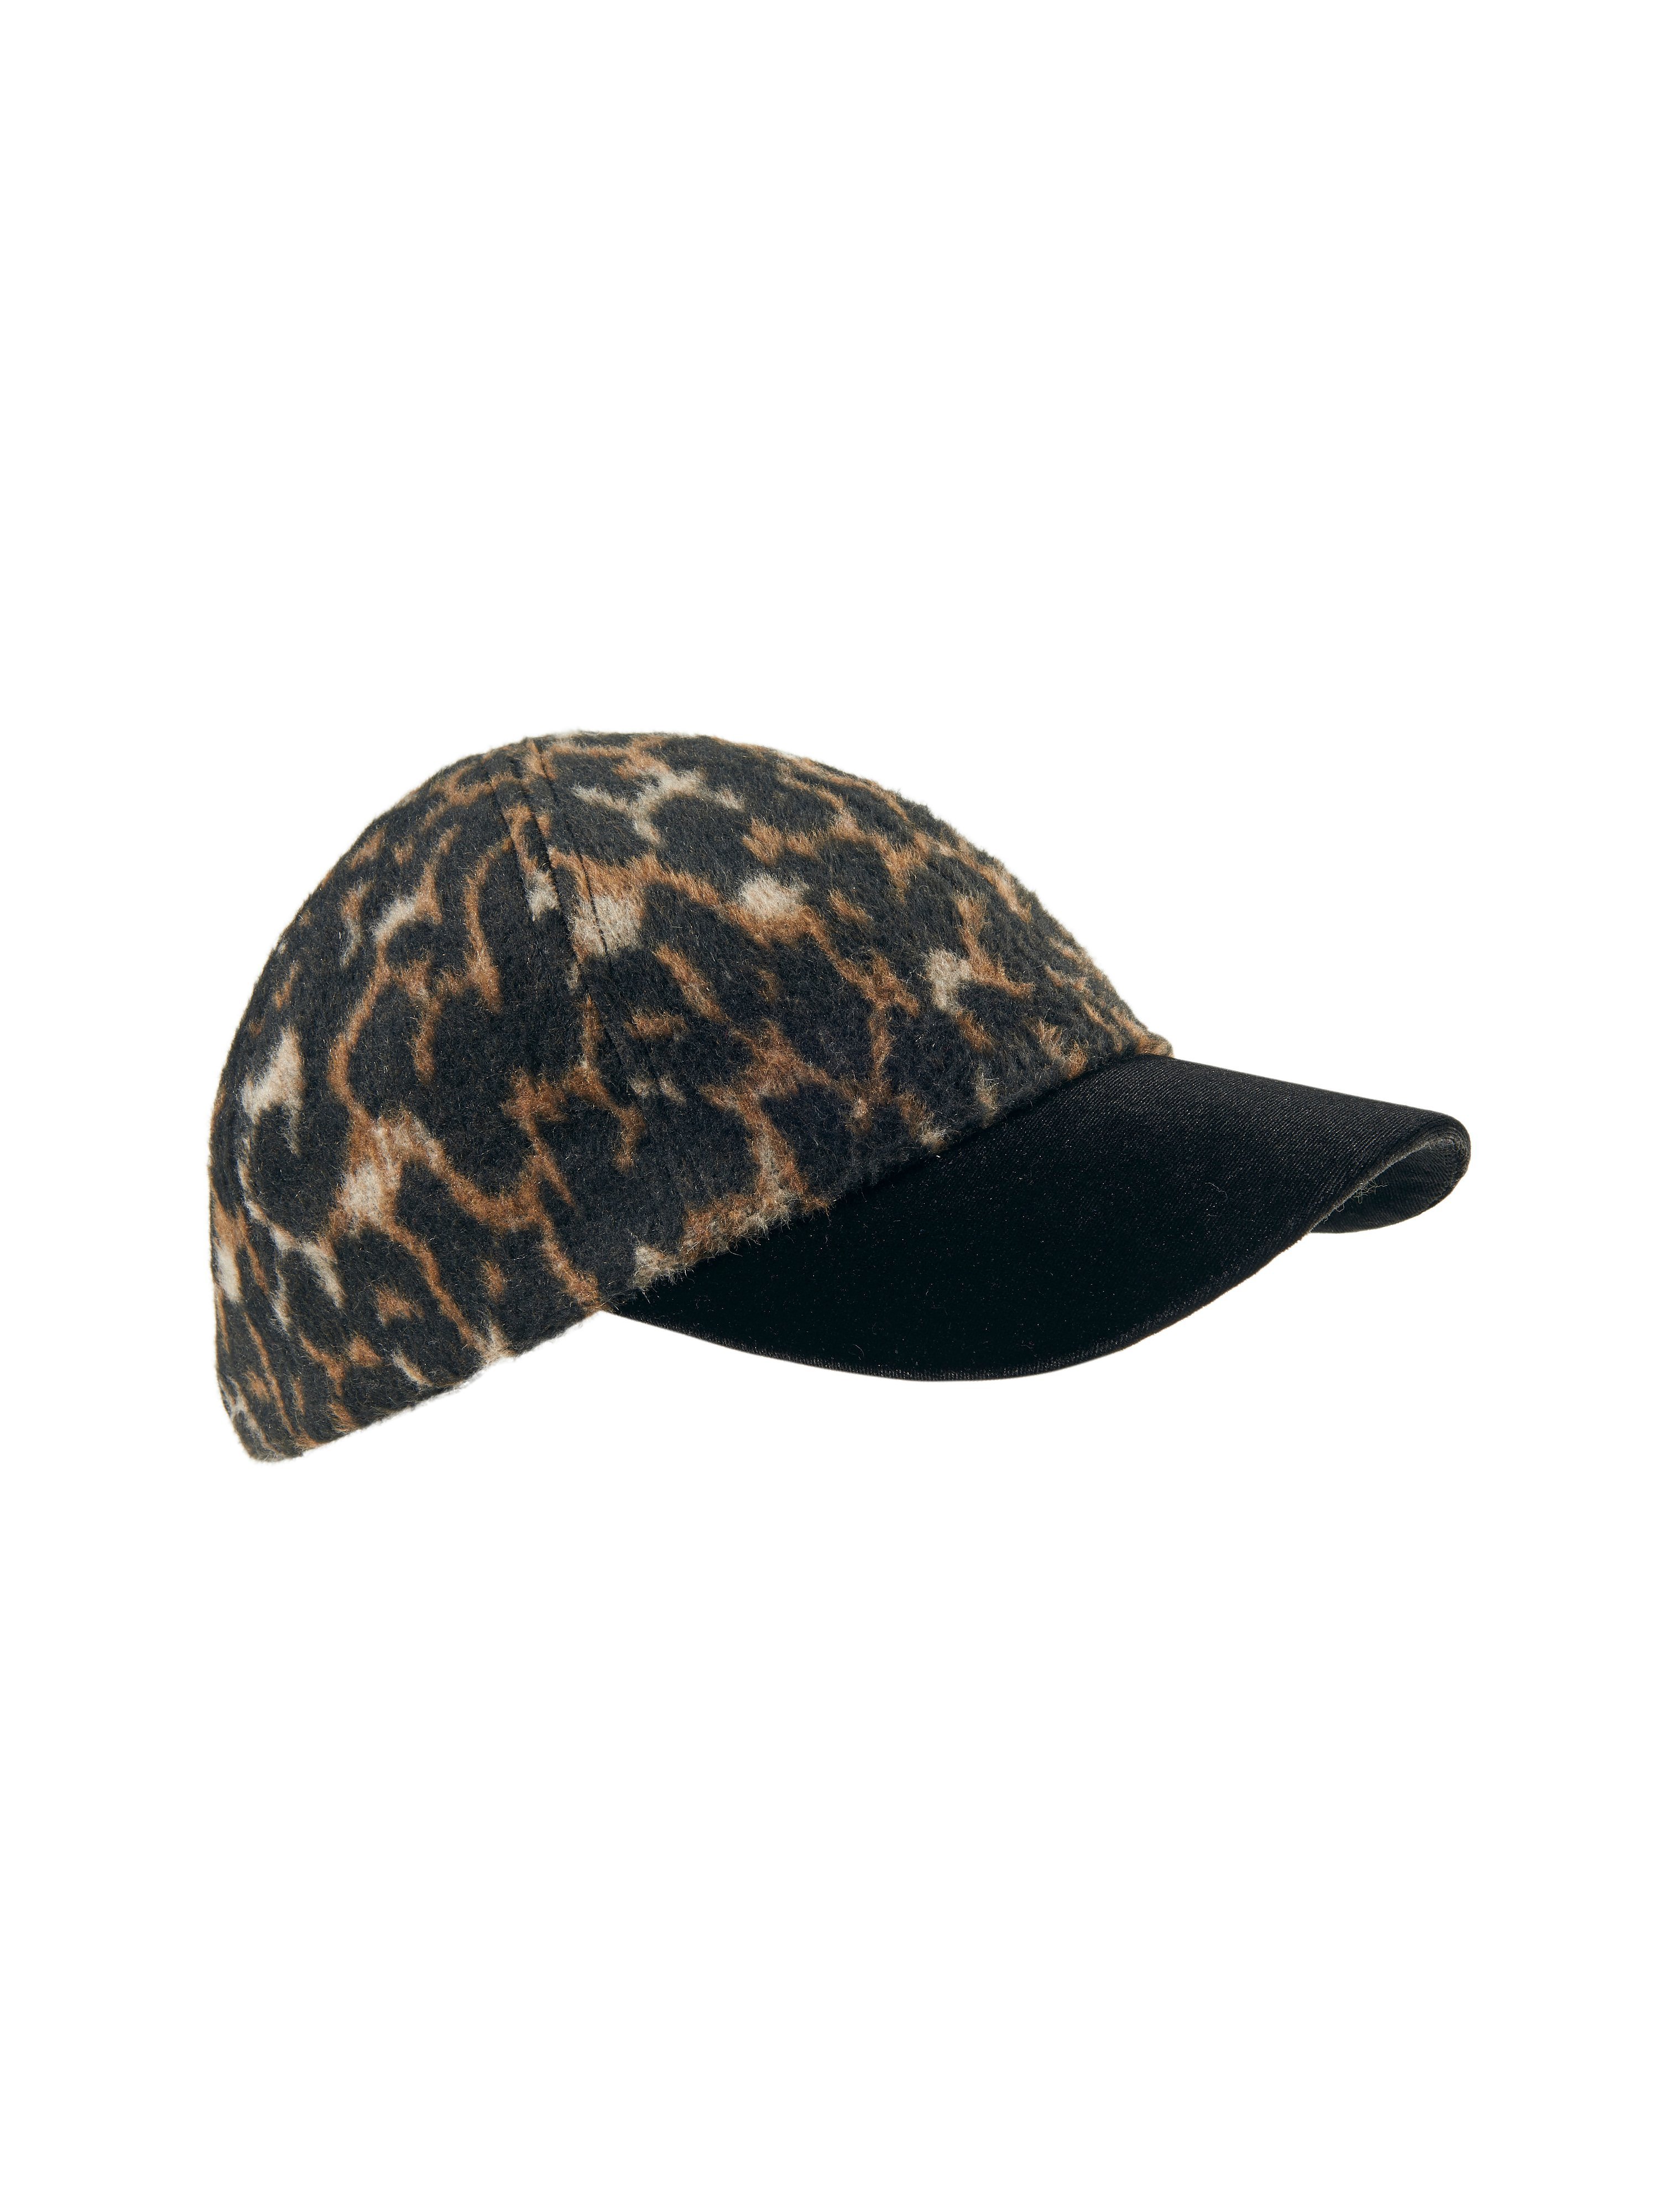 Cap leopard skin print Seeberger black